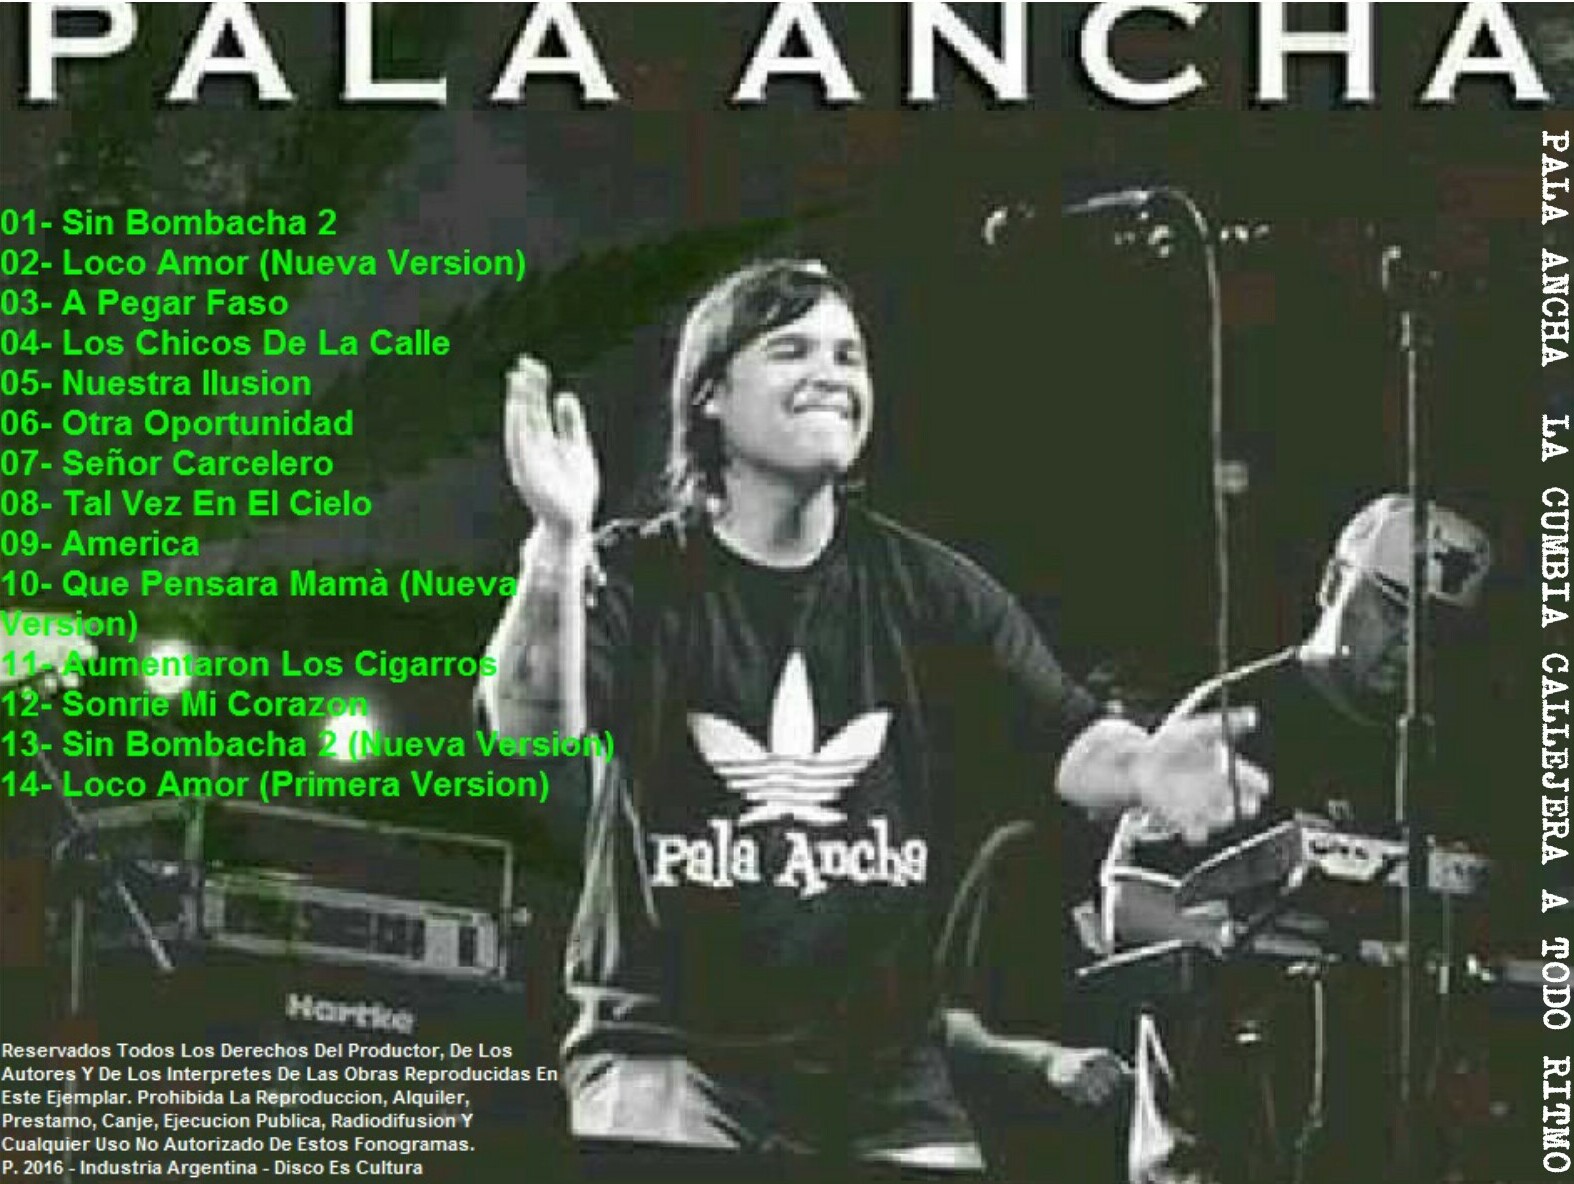 Pala Ancha - Cumbia Callejera - Reviews - Album of The Year